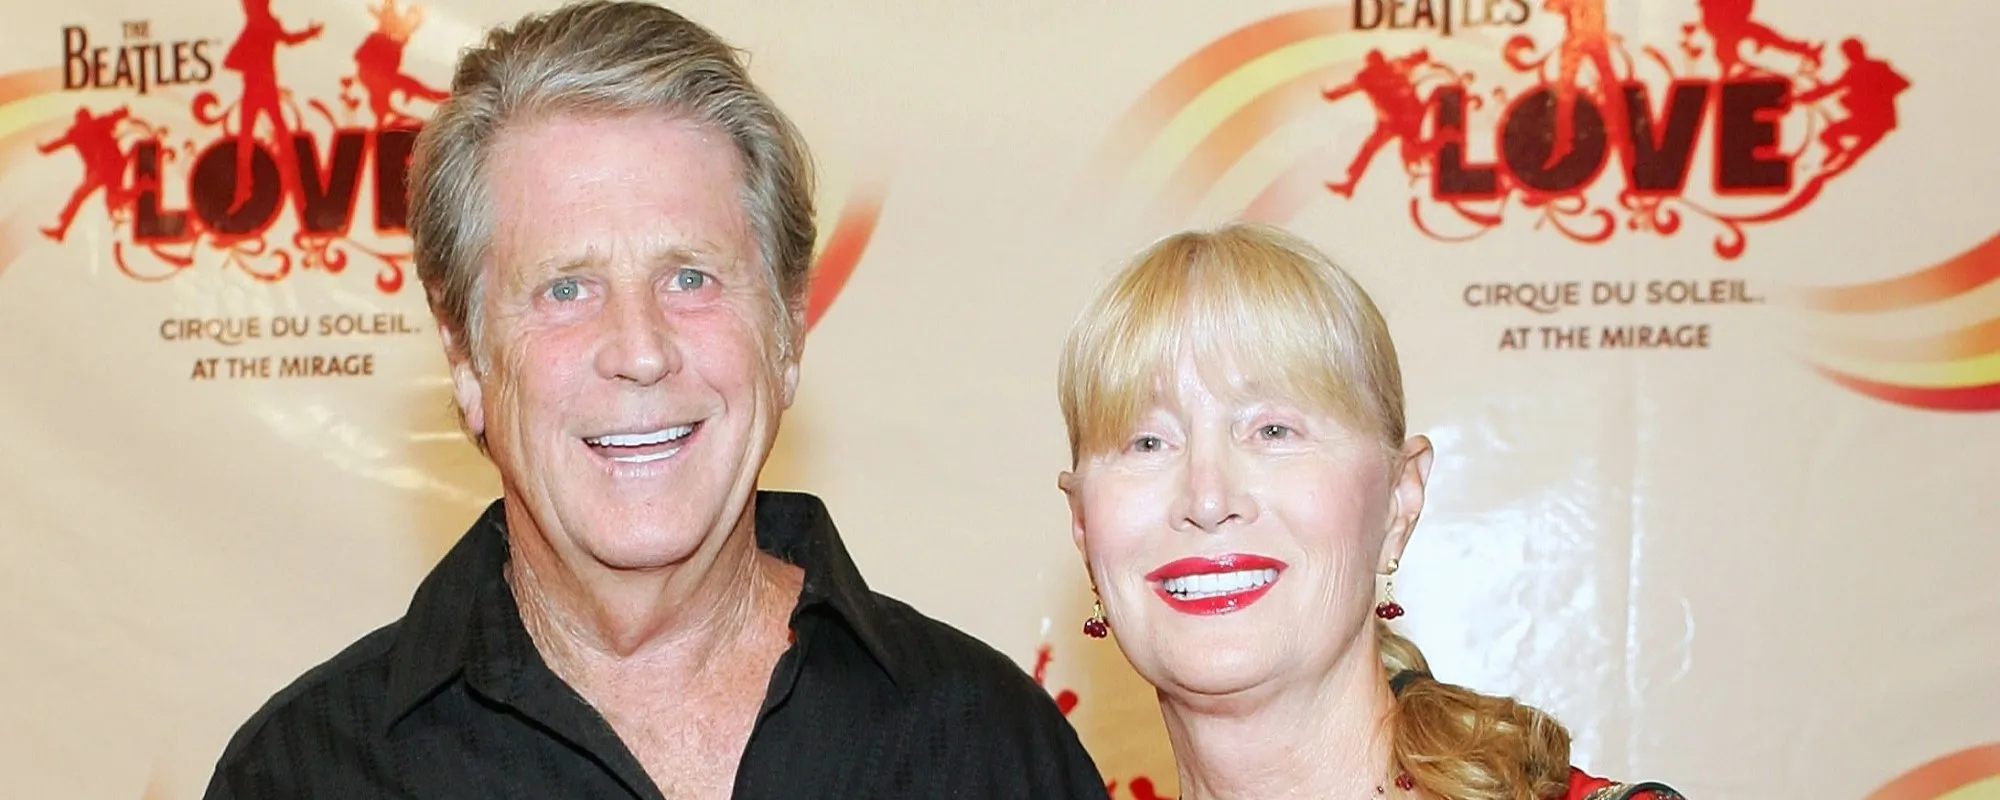 Beach Boys Legend Brian Wilson Mourns Death of Wife Melinda: “She Was My Savior”